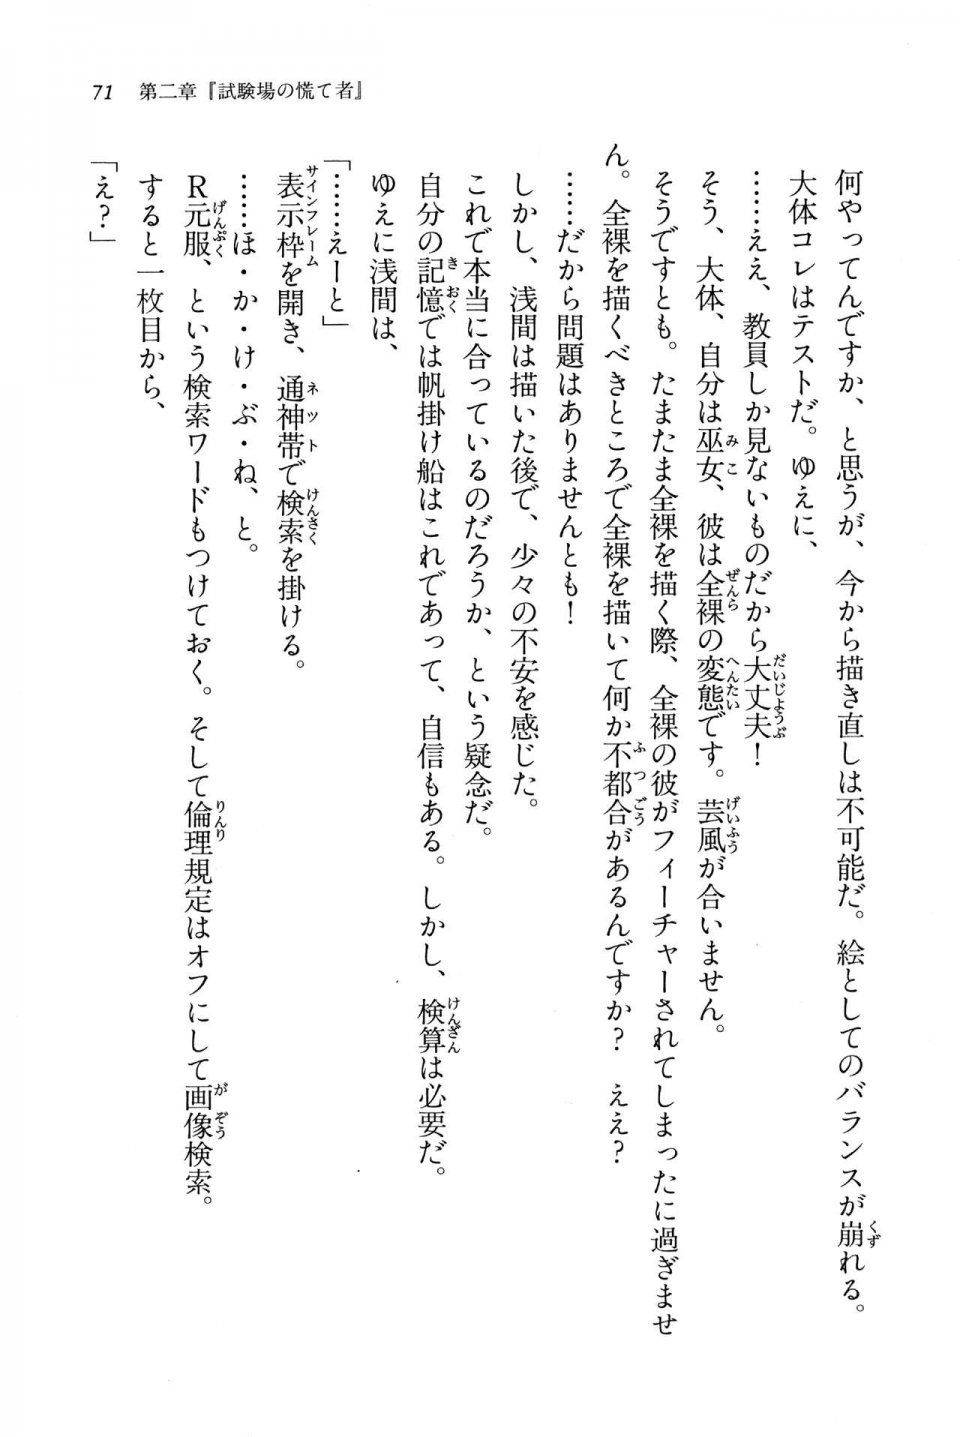 Kyoukai Senjou no Horizon BD Special Mininovel Vol 7(4A) - Photo #75